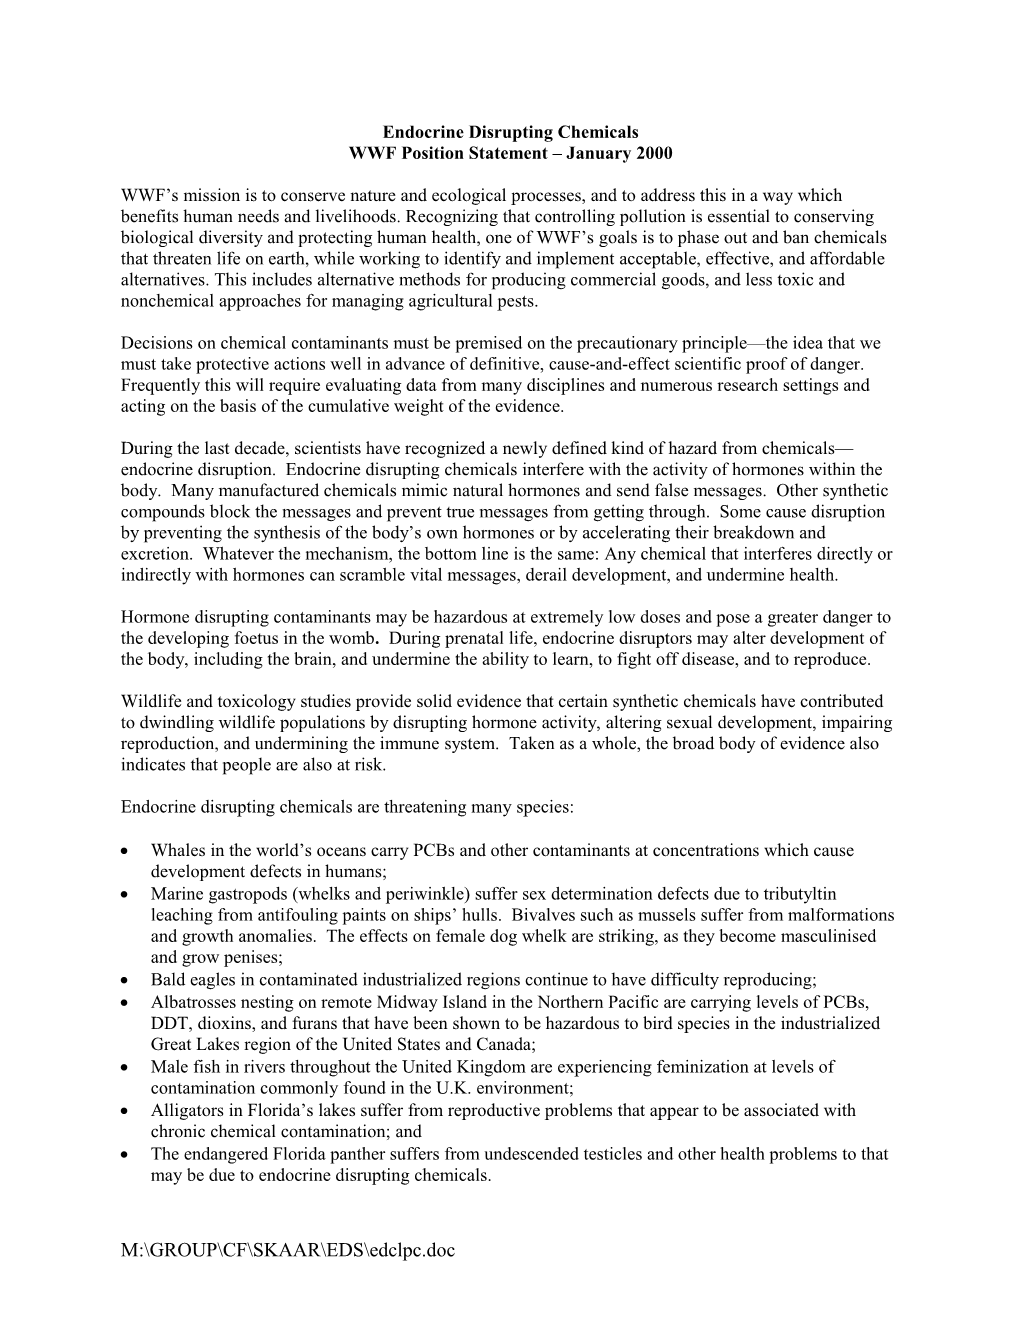 Endocrine Disrupting Chemicals Draft Position Statement November 1999